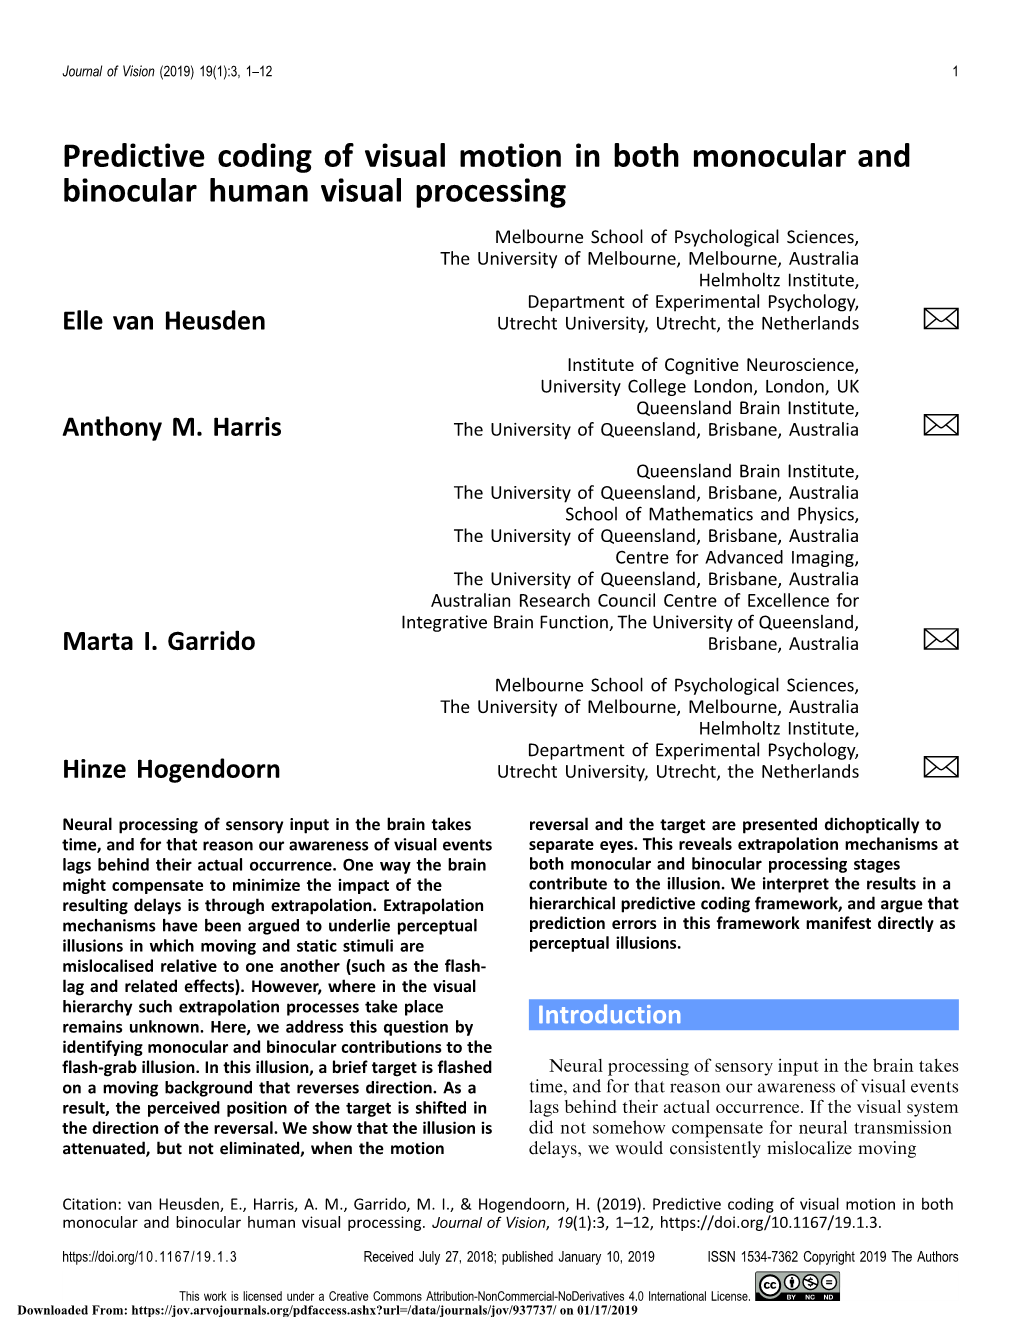 Predictive Coding of Visual Motion in Both Monocular and Binocular